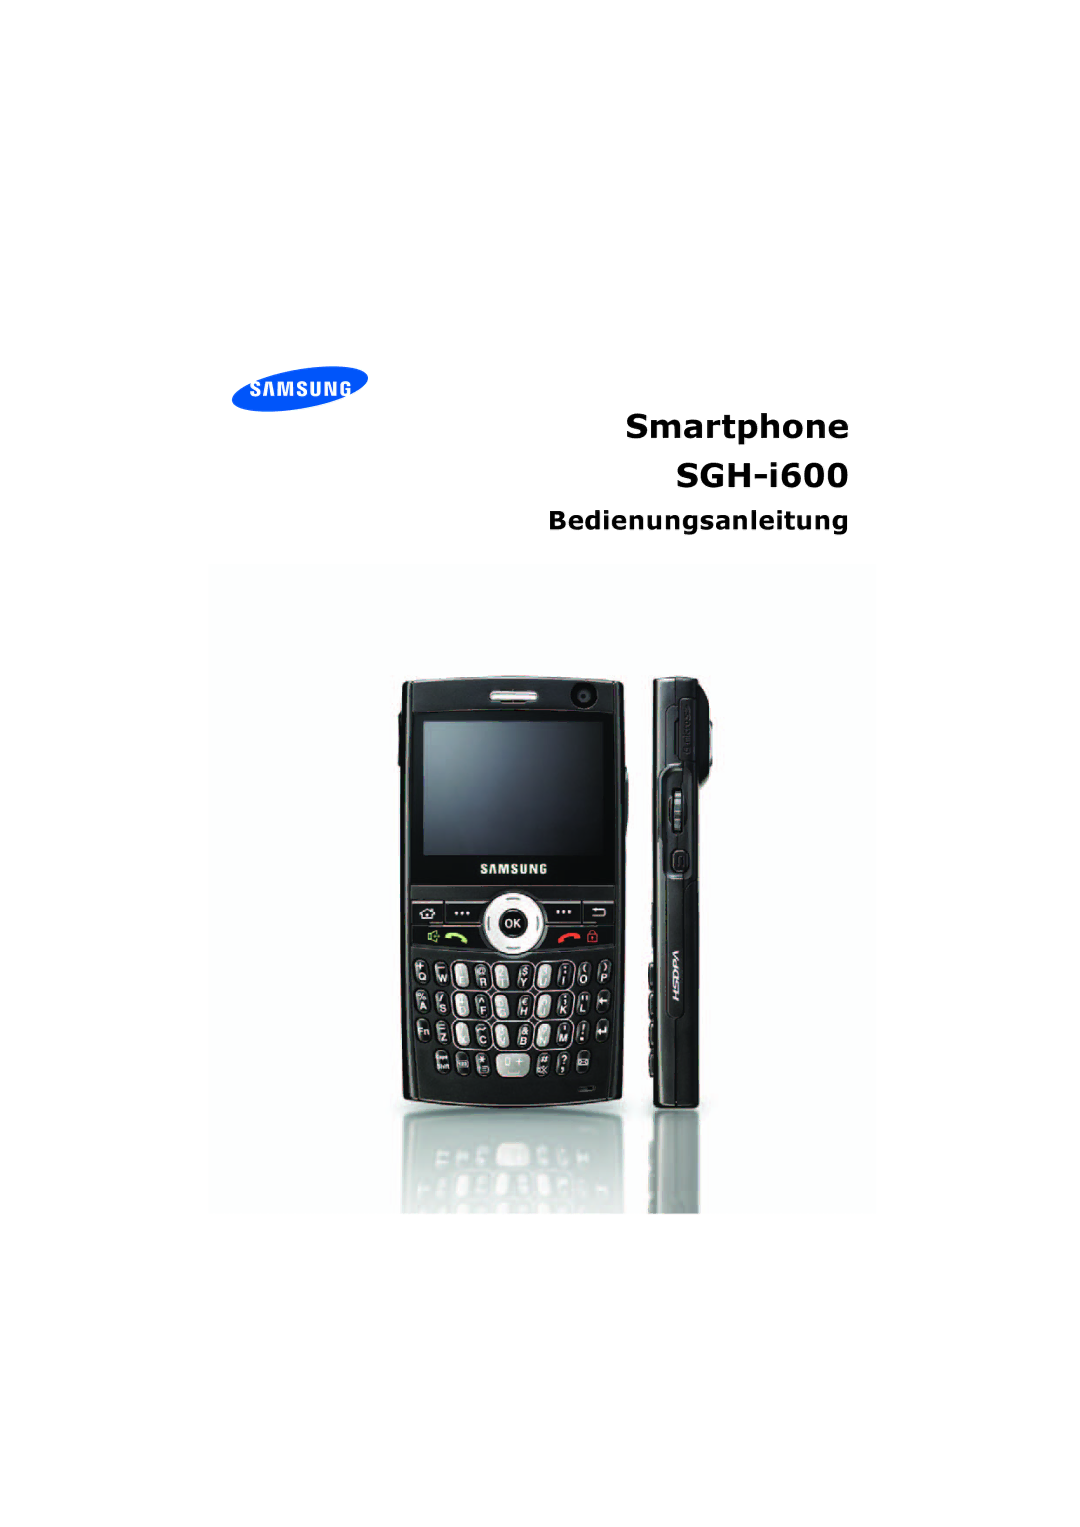 Samsung SGH-I600LKUDBT, SGH-I600LKVVD2, SGH-I600LKAEPL, SGH-I600LKAXEG, SGH-I600MAADBT manual Smartphone SGH-i600 